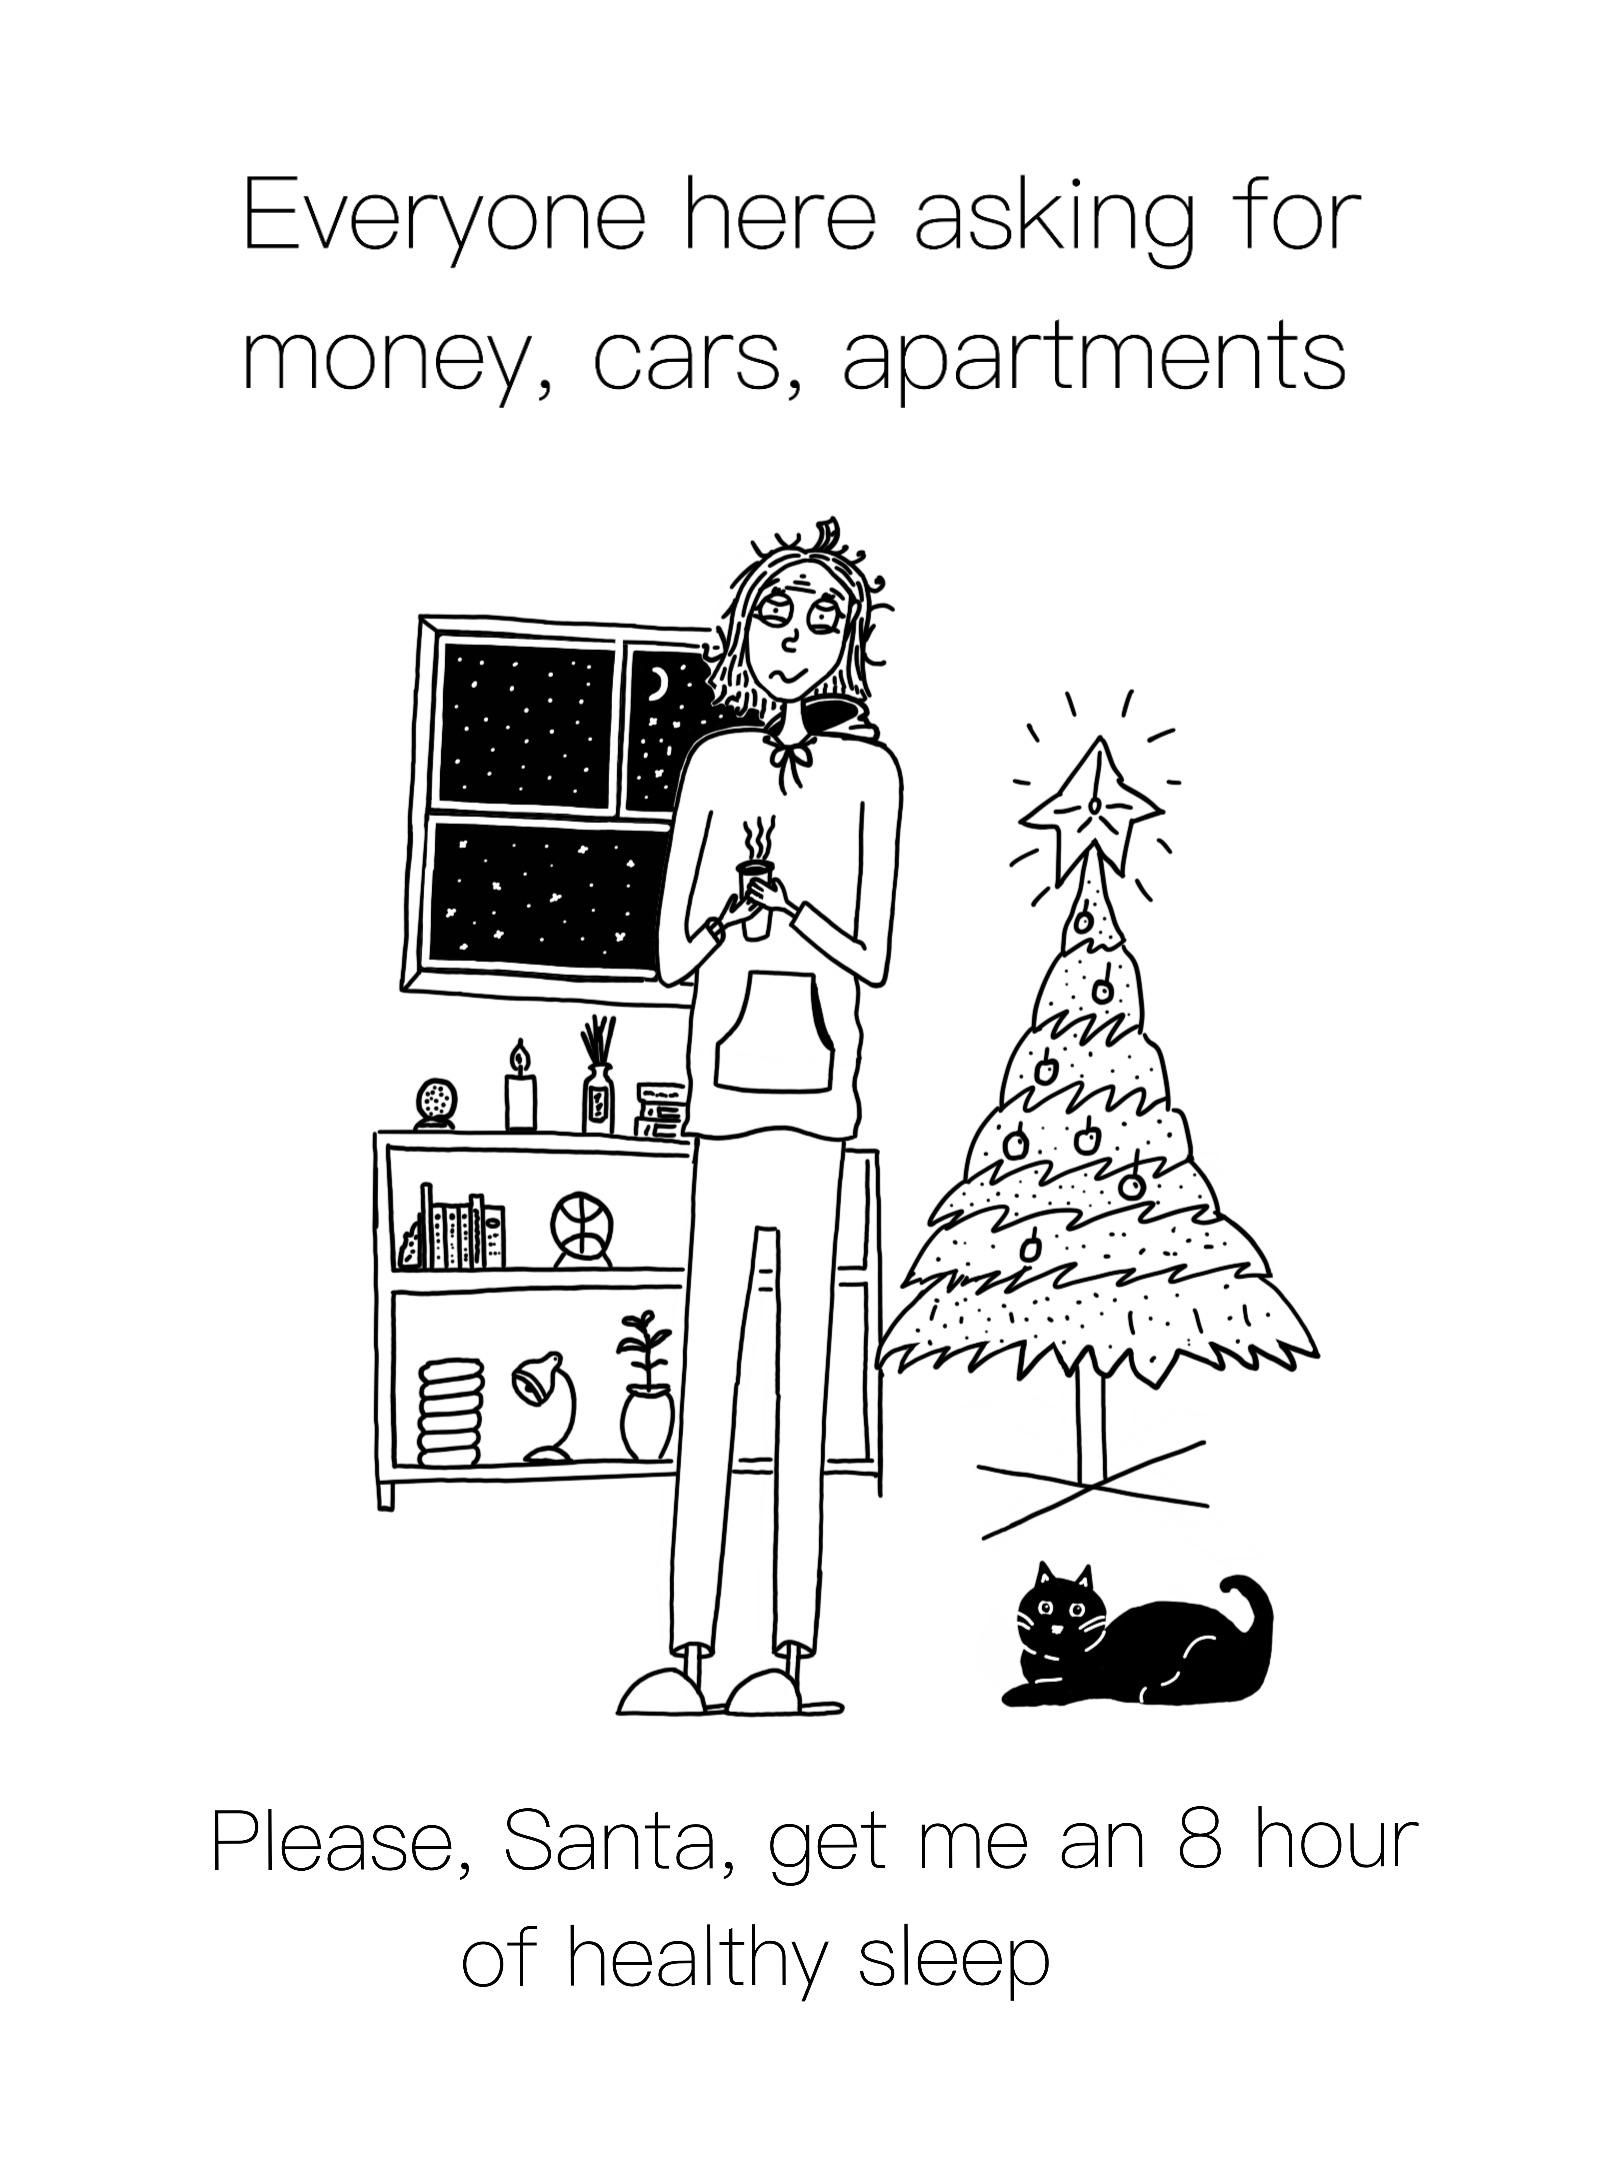 Please, Santa